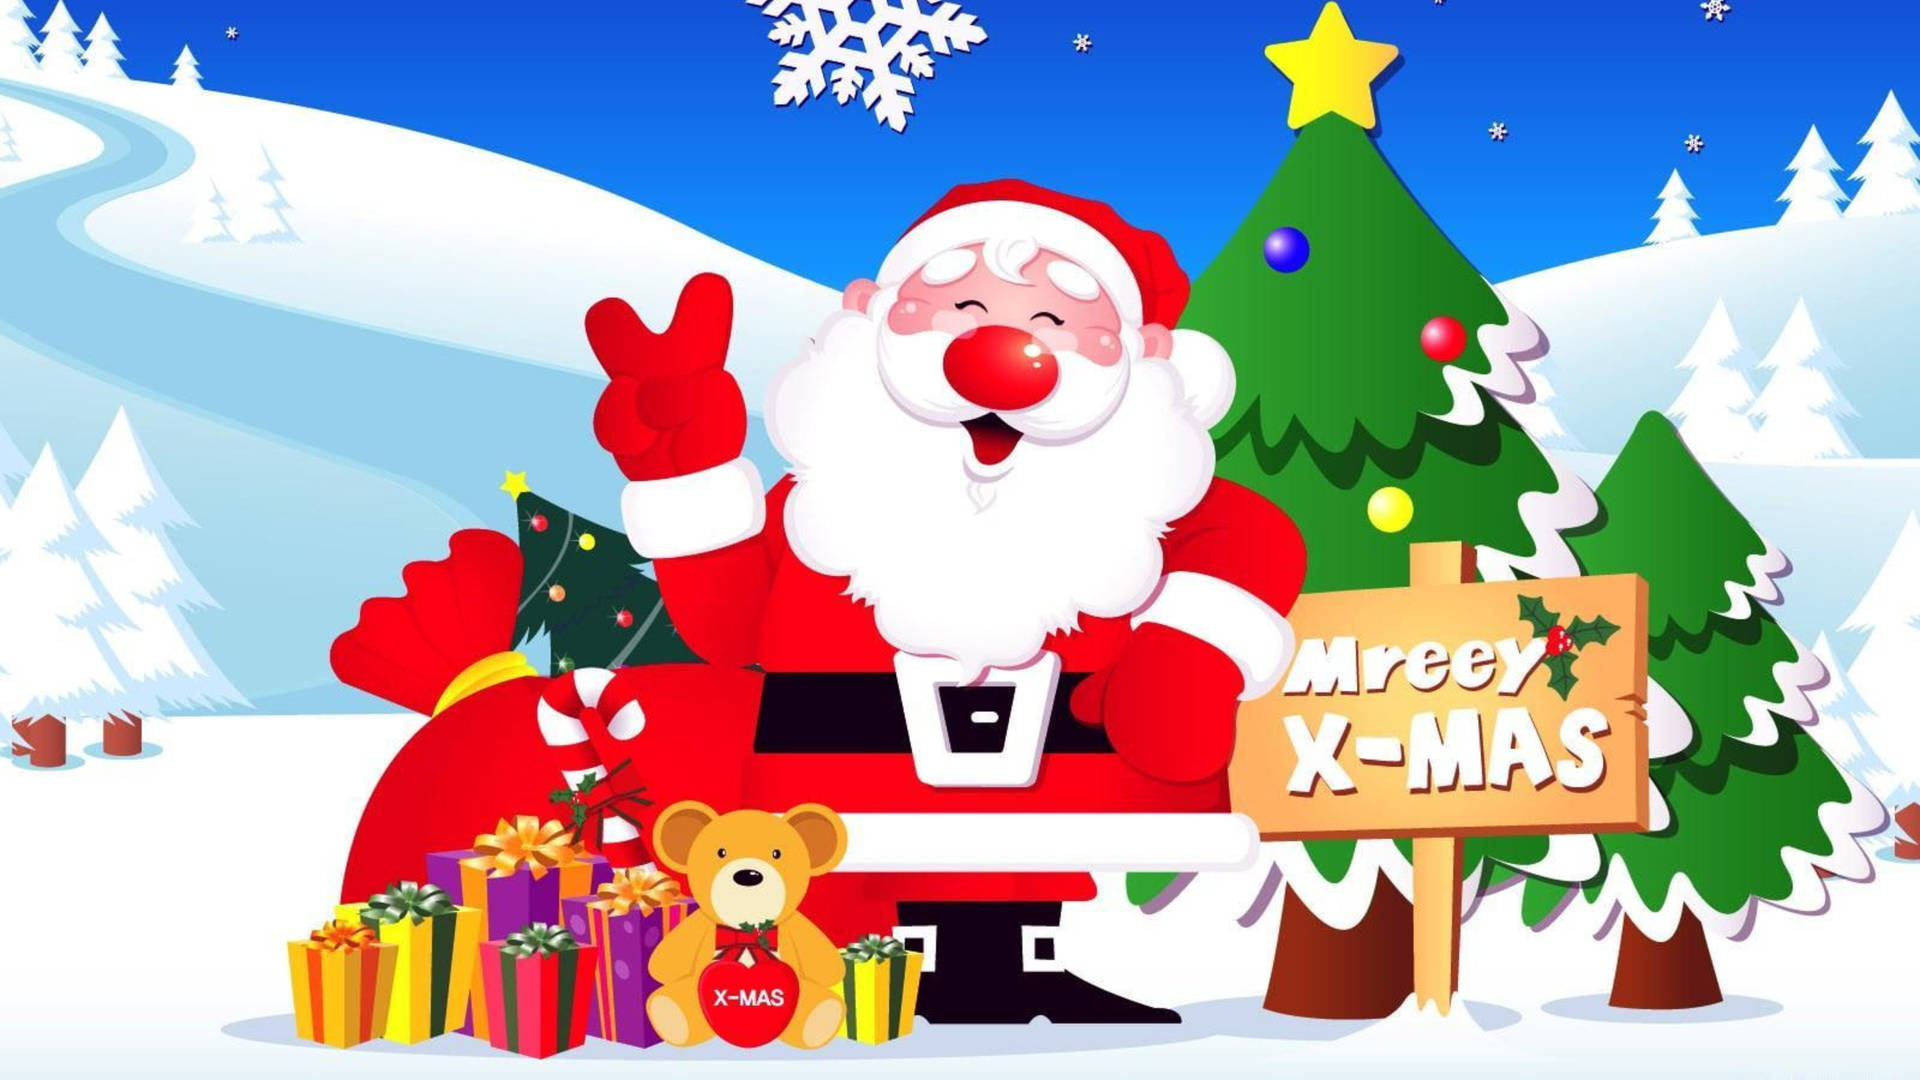 Santa Claus Merry X-mas Background